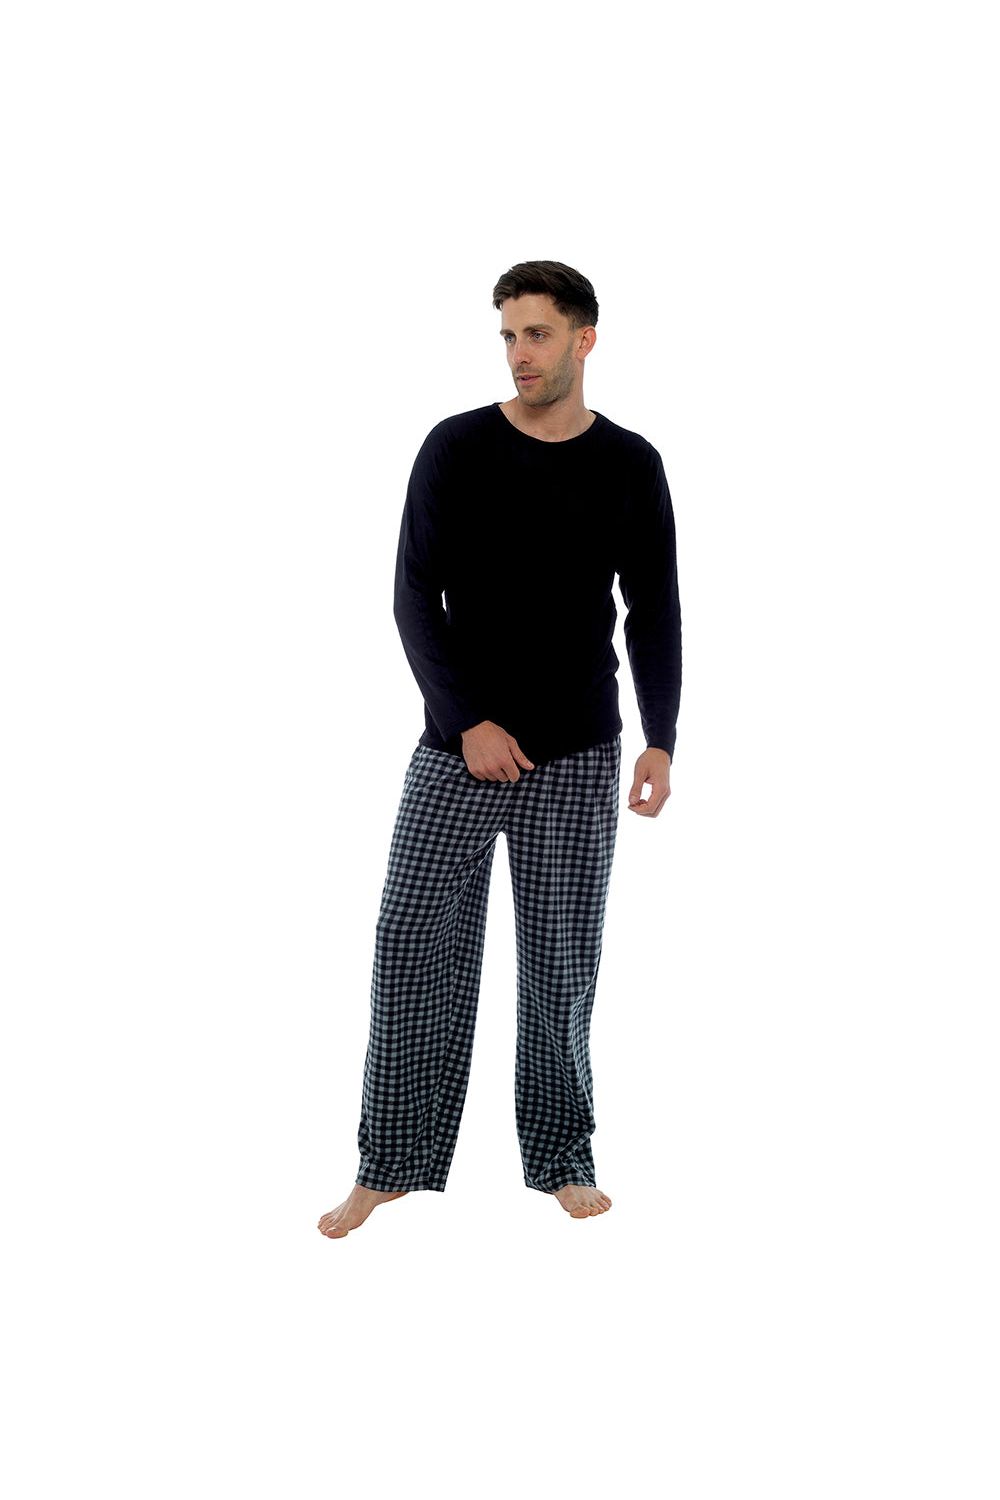 Men's Black Check Fleece Bottom Pyjamas - Pyjamas.com